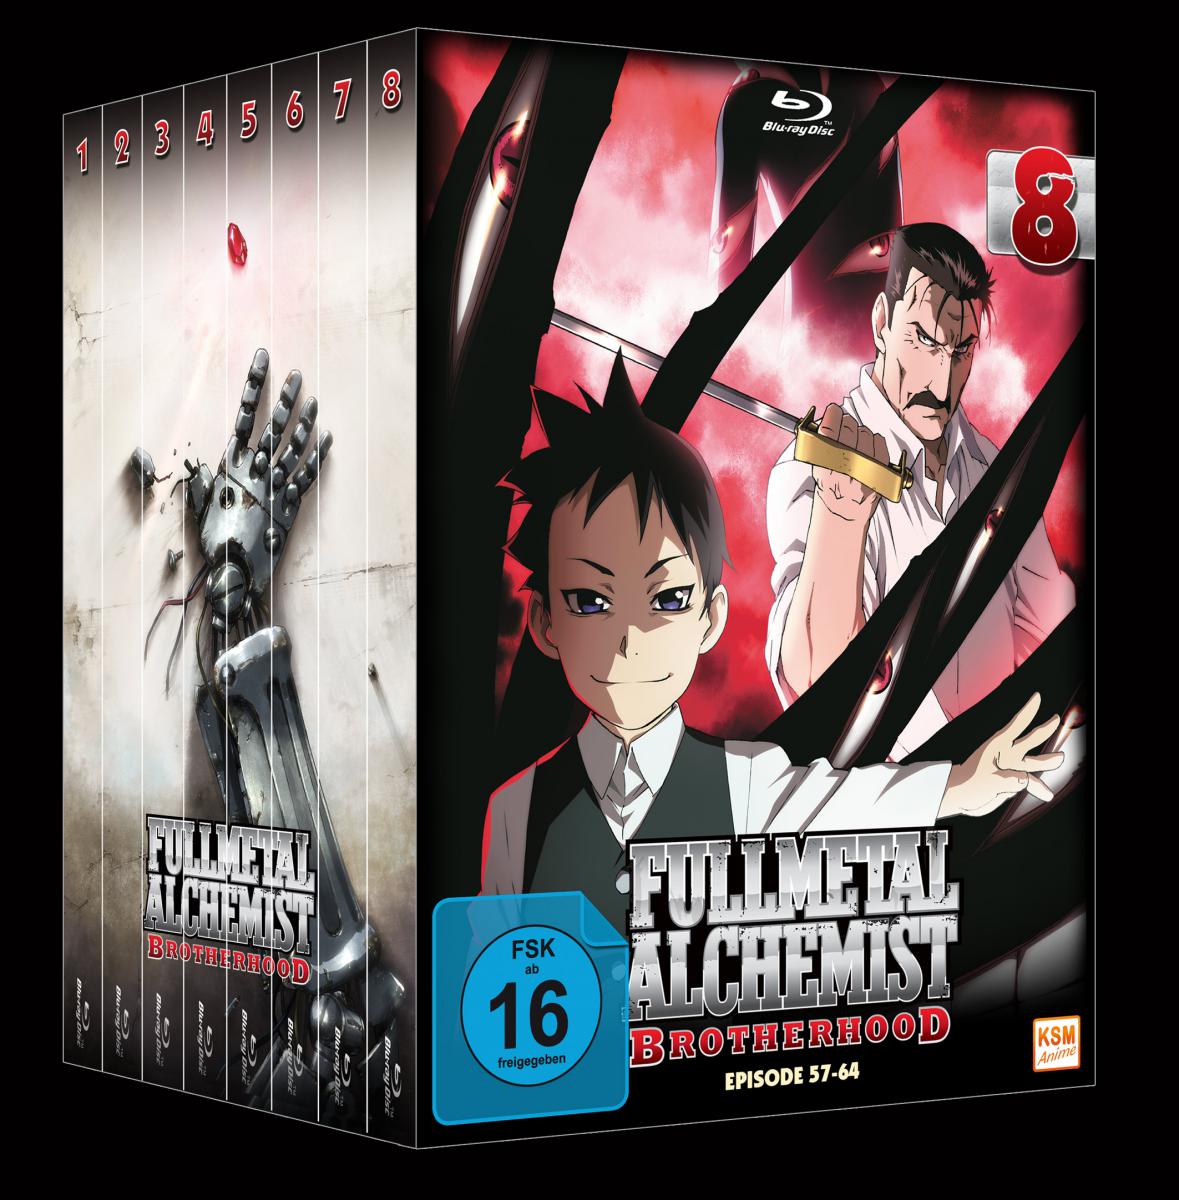 Fullmetal Alchemist: Brotherhood - Volume 2: Episode 09-16 (Limited Edition) Blu-ray Image 6